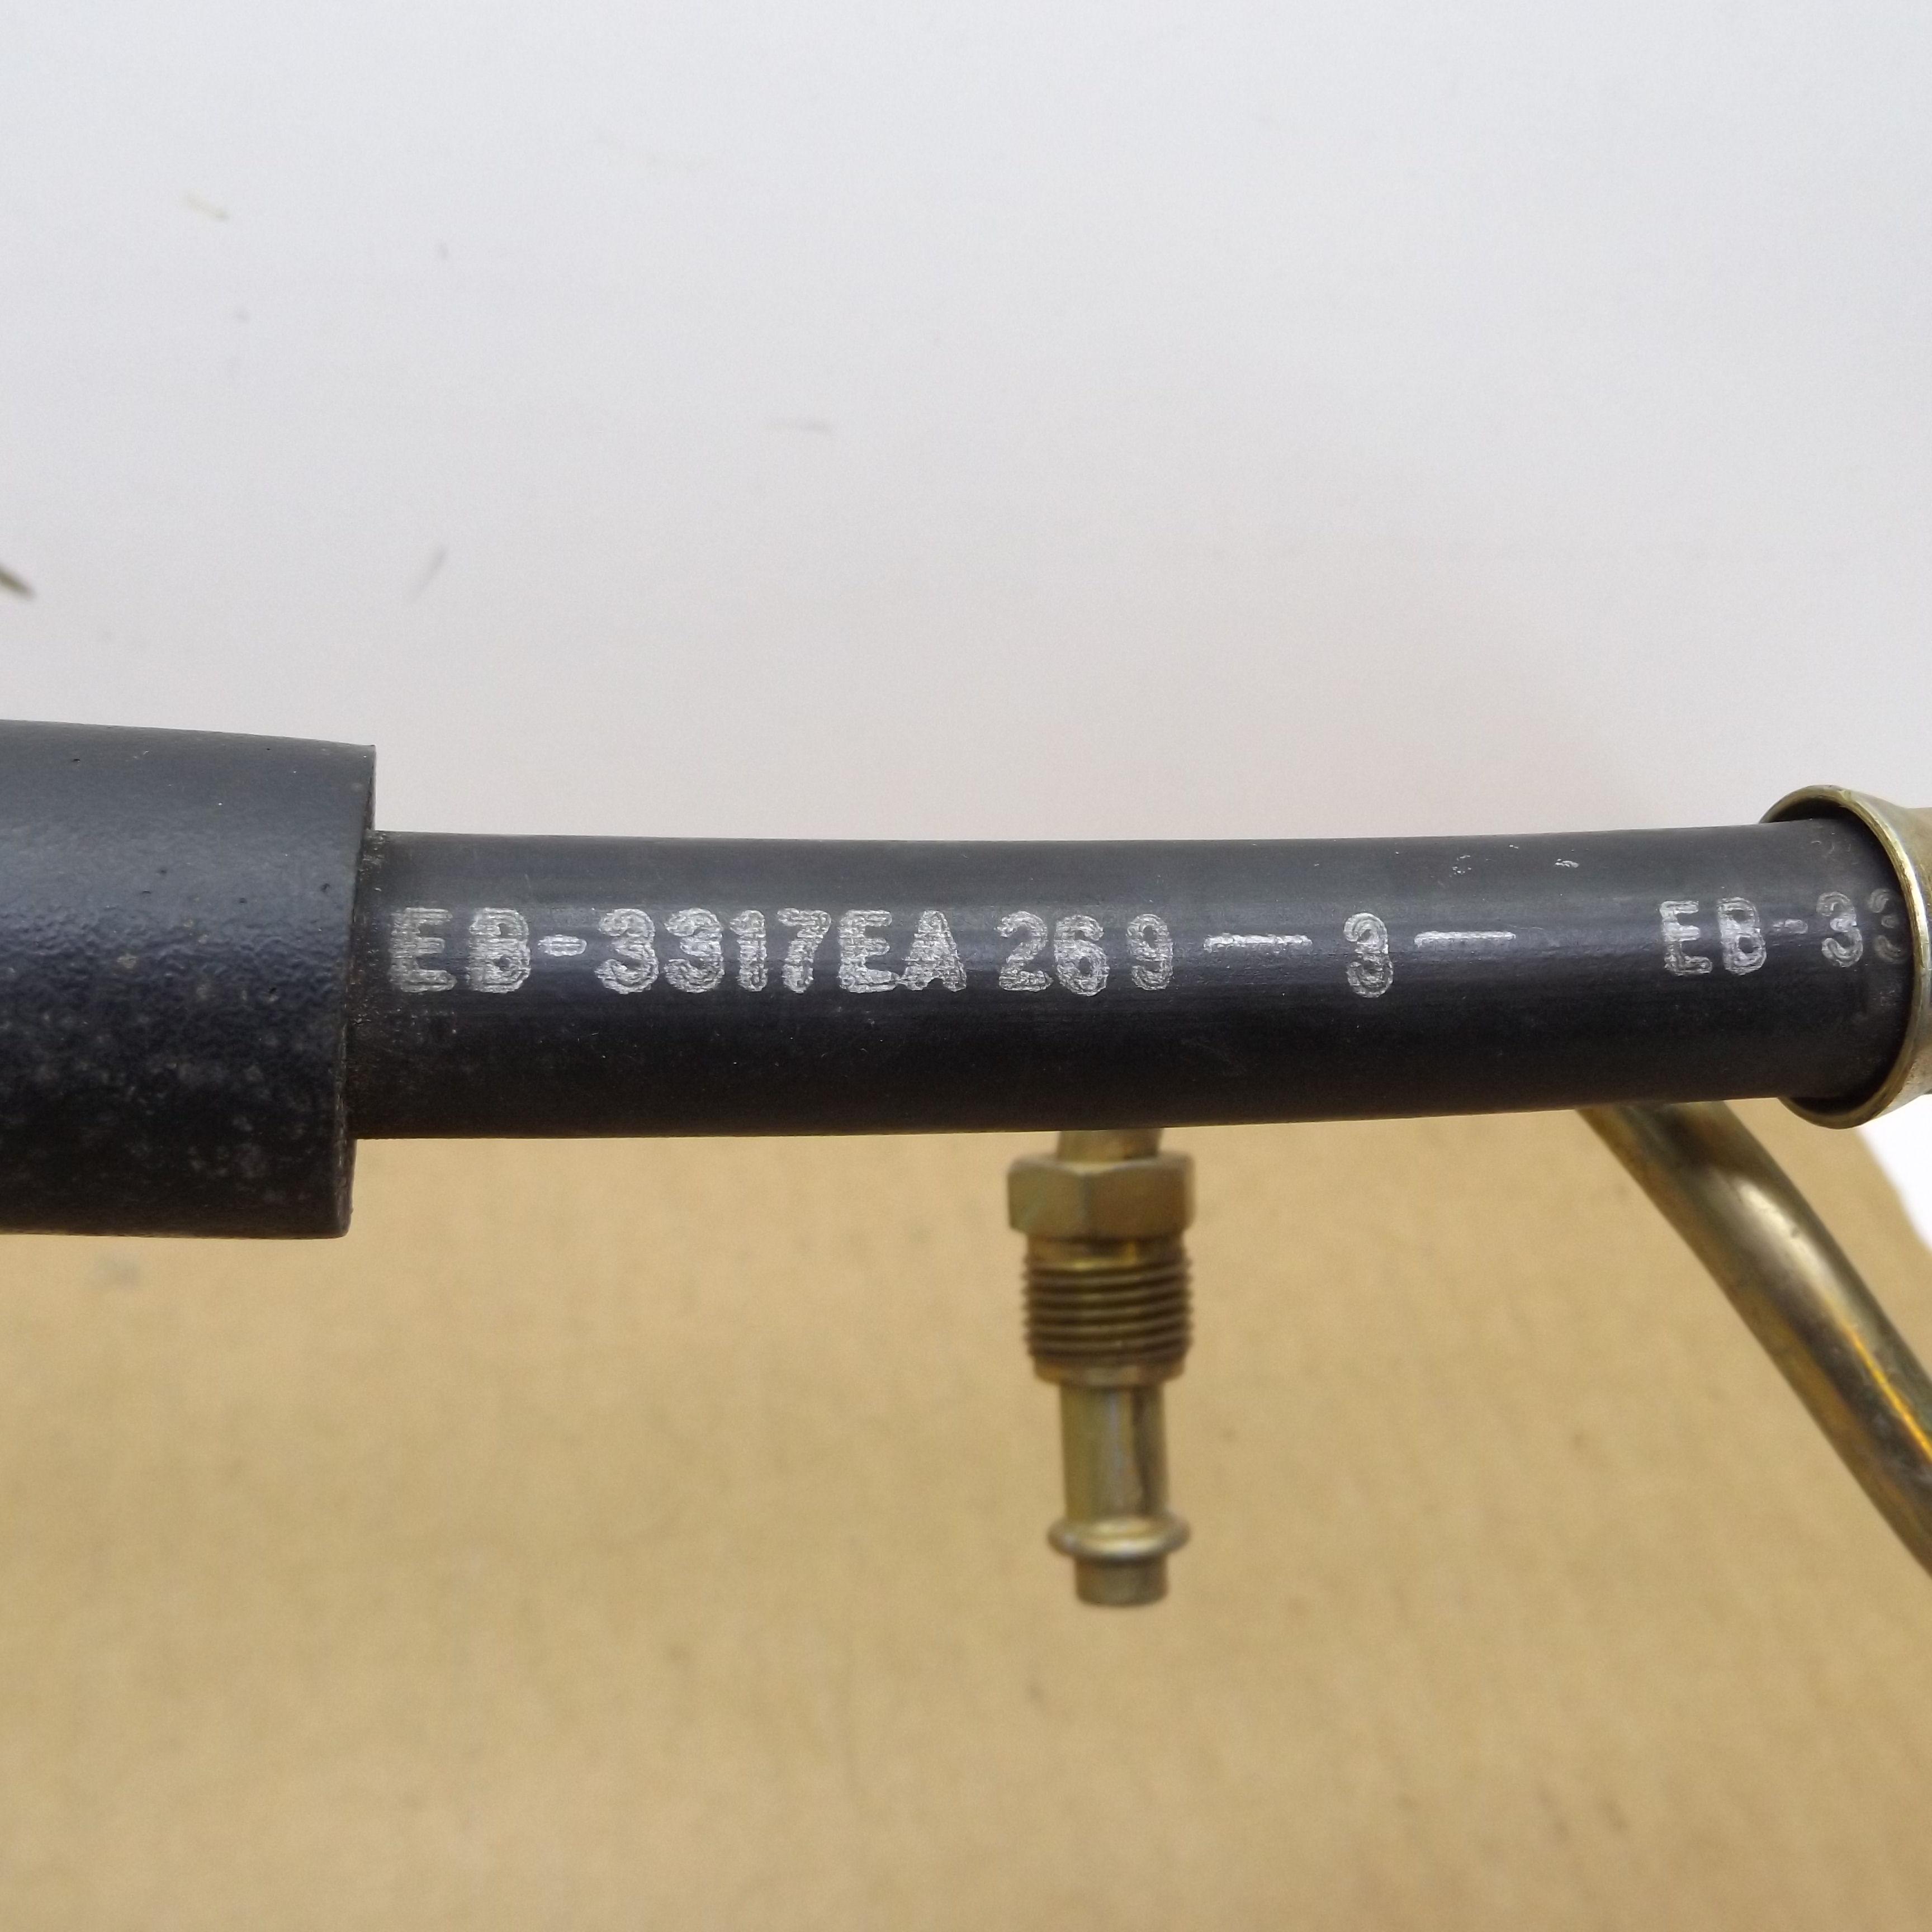 hose stamping# EB-3317EA 269-3-